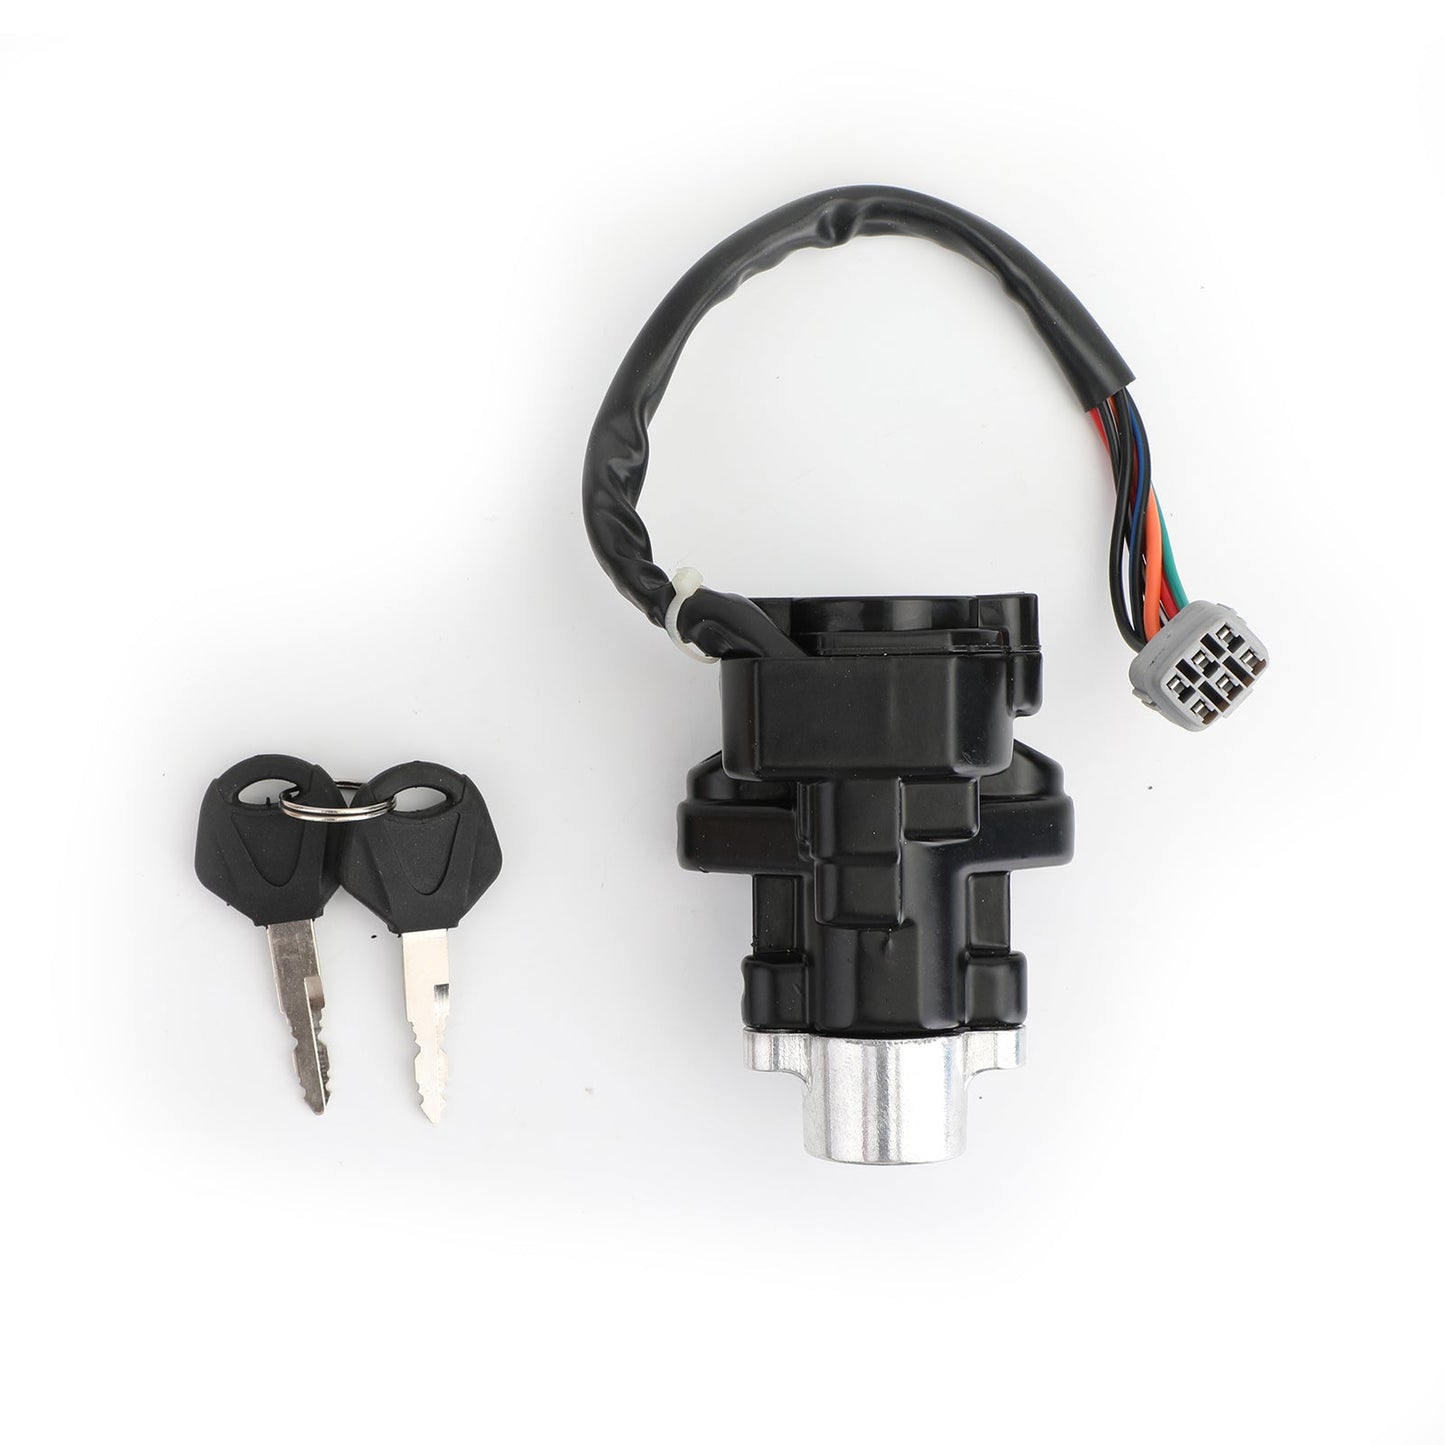 Ignition Switch Lock Keys Kit Fit For Suzuki DL1000 DL650 V-Strom GSF650/S Bandit GSF1200 GSF1250 GSX650F